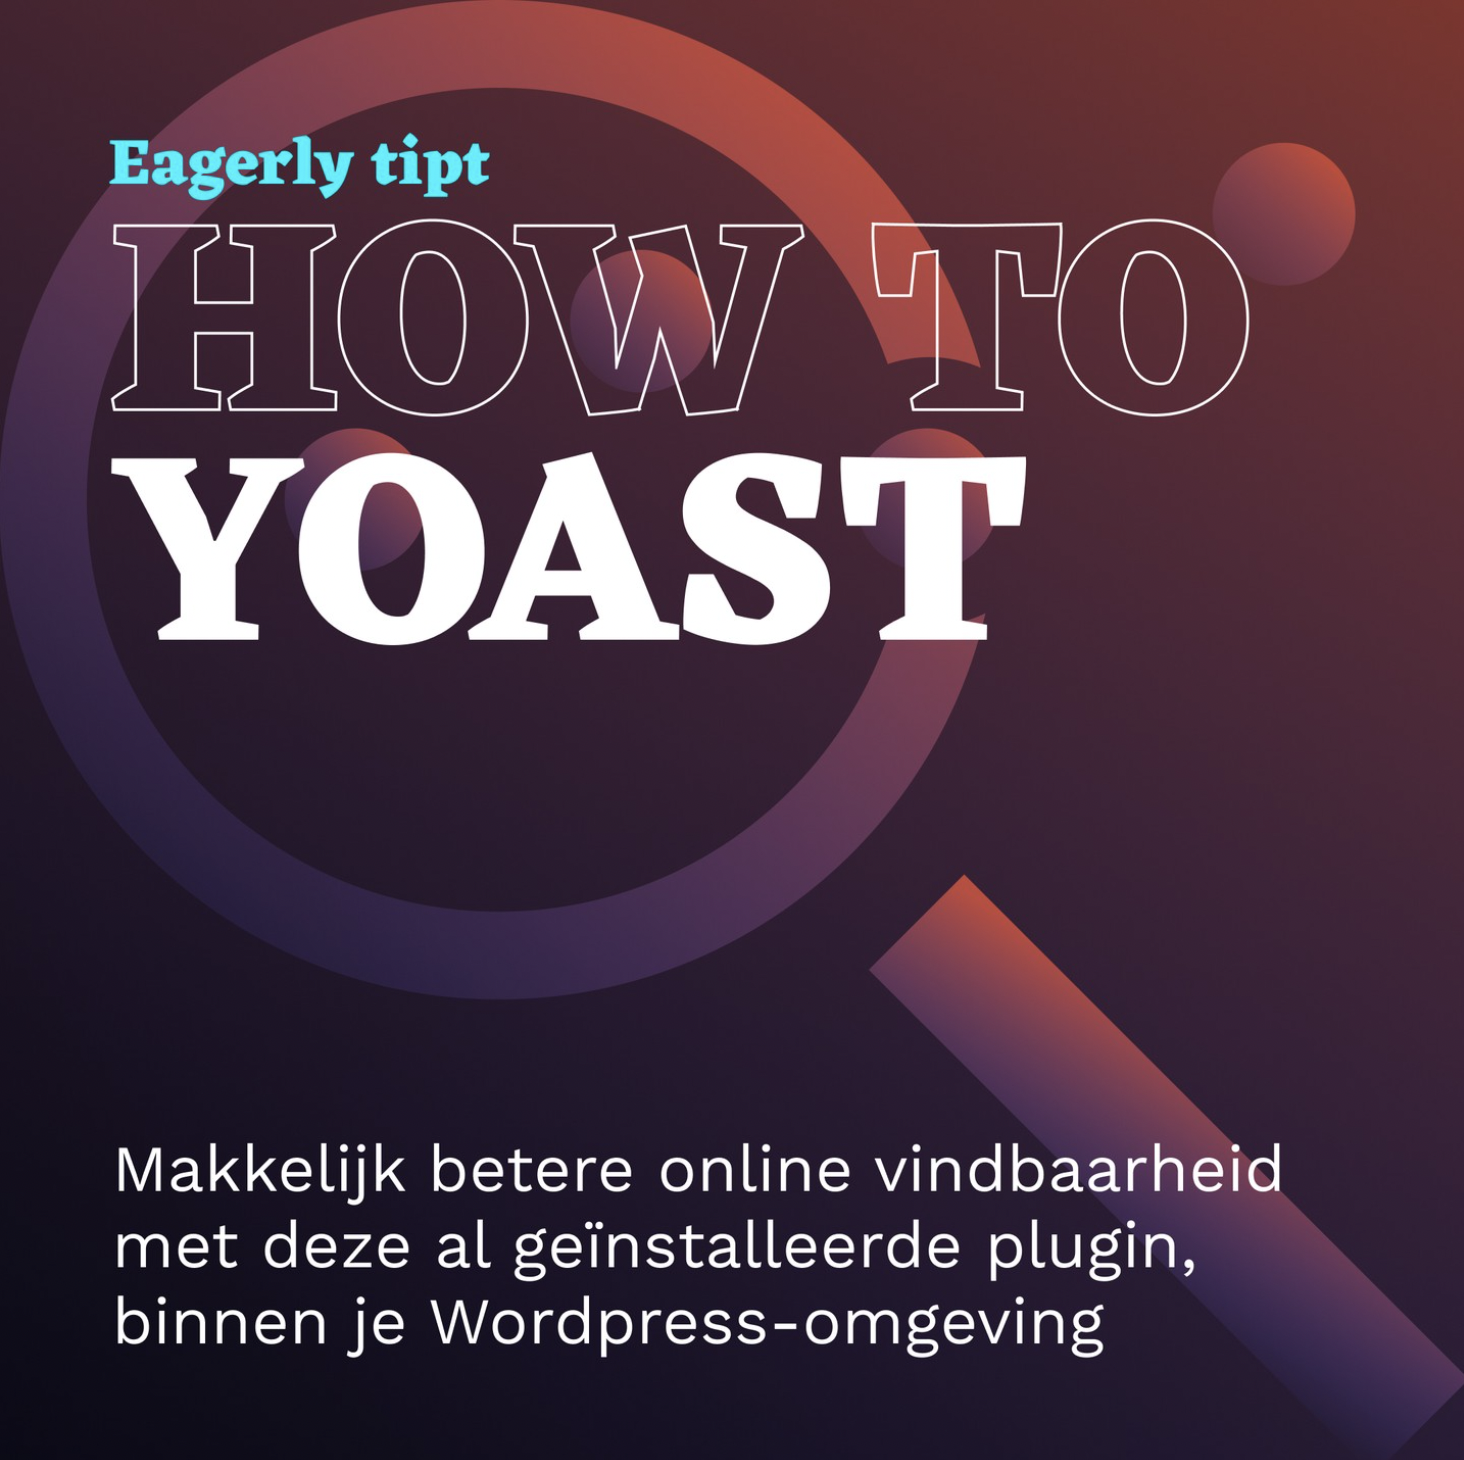 De Yoast plugin: how to?